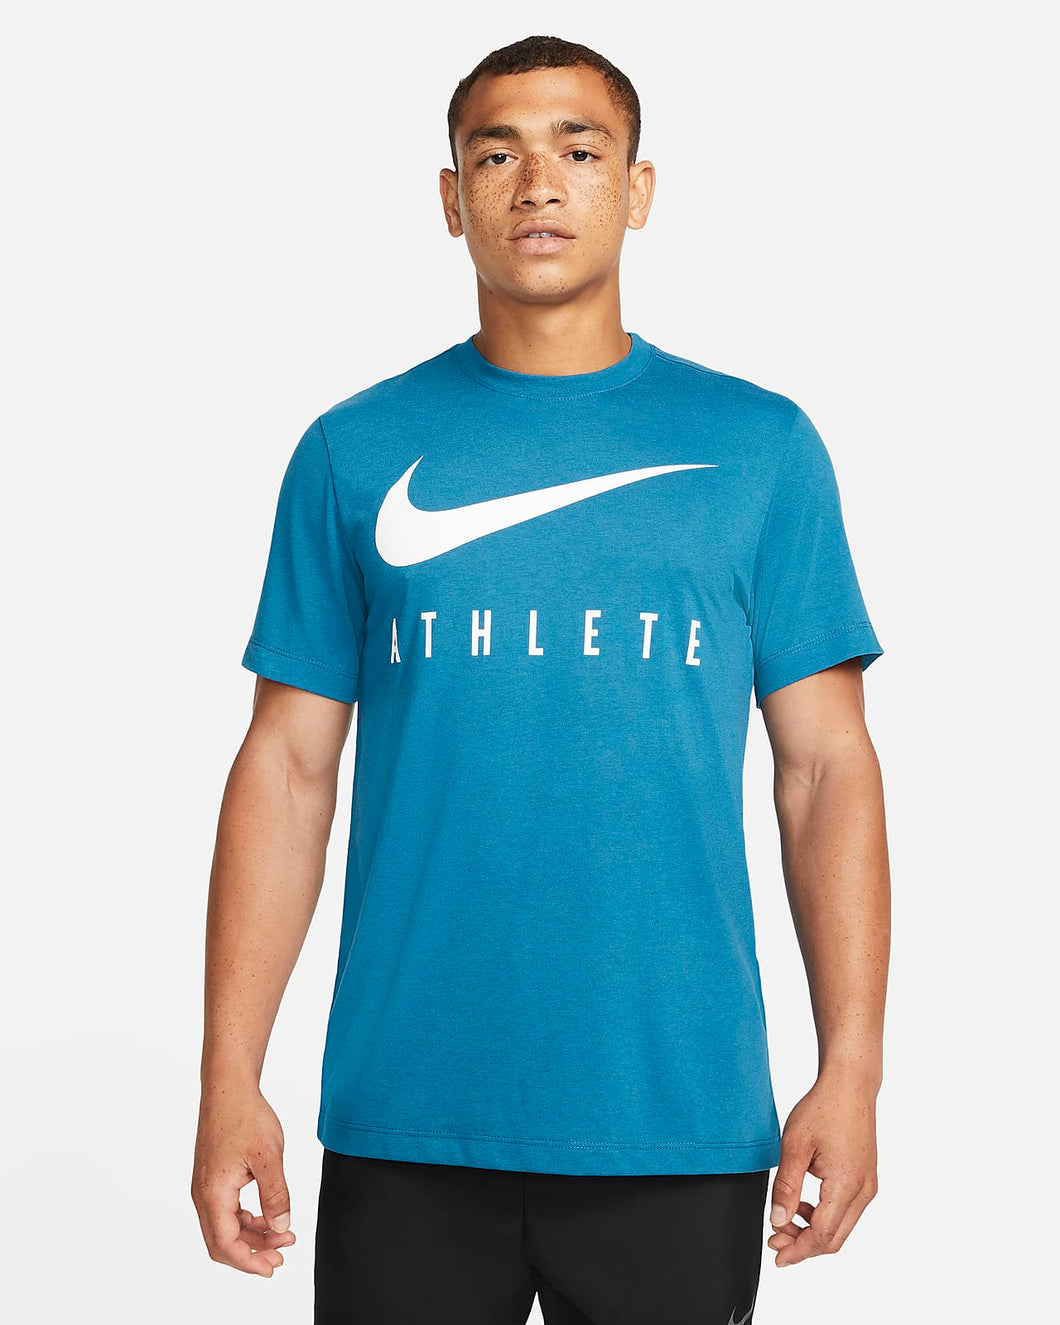 Nike Swoosh Athlete T-Shirt - Industrial Blue